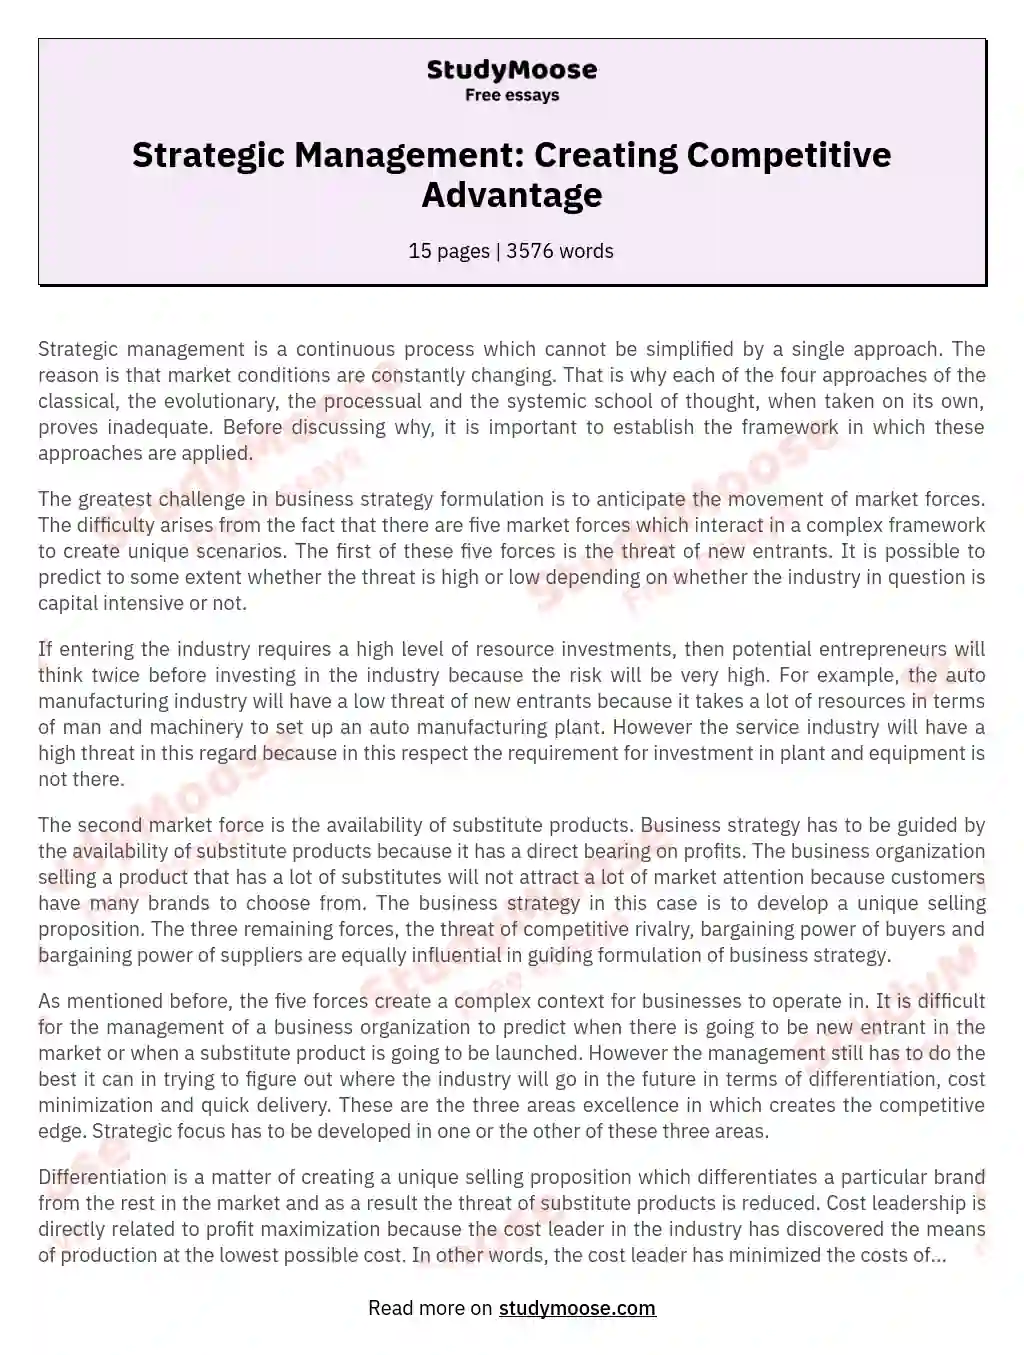 competitive advantage essay